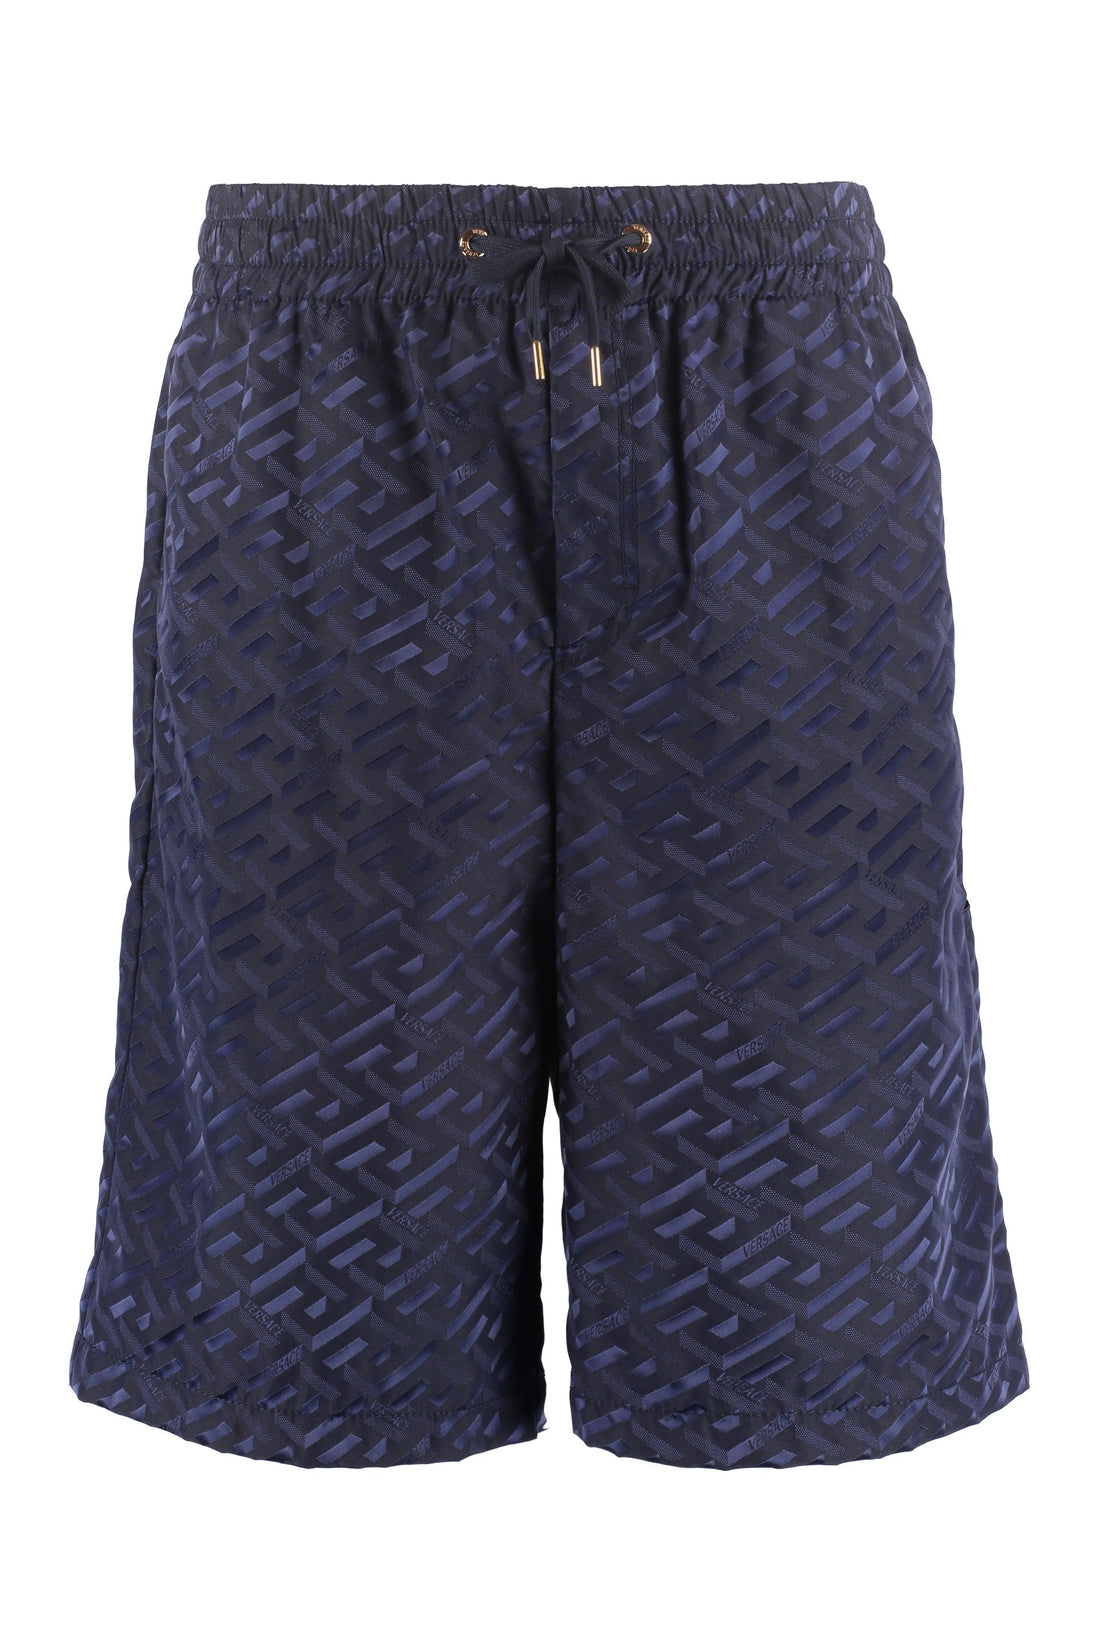 Versace-OUTLET-SALE-Techno fabric bermuda-shorts-ARCHIVIST